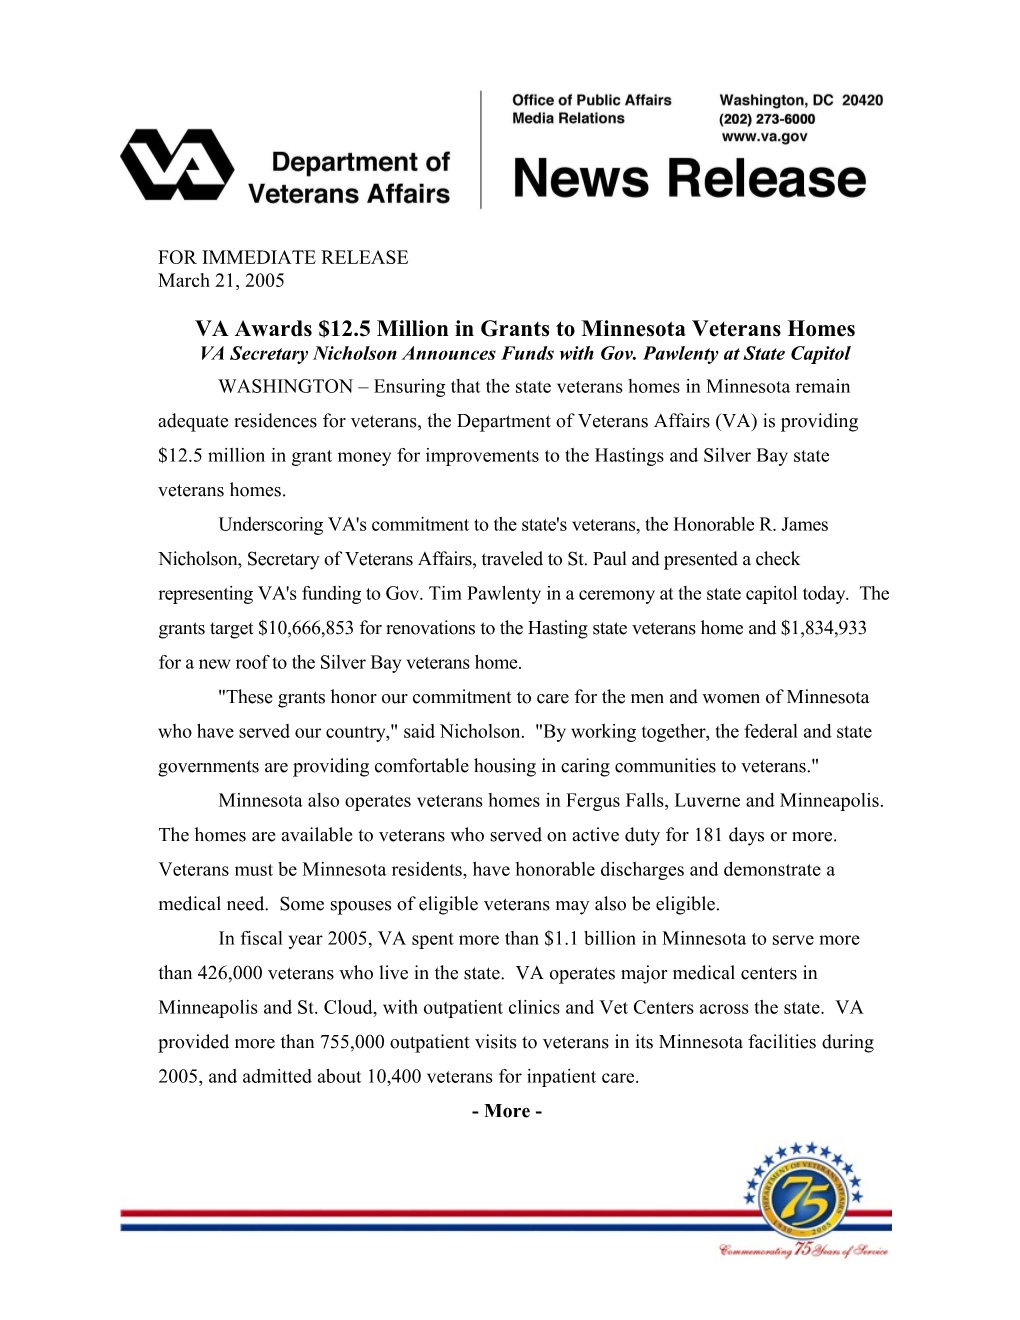 VA Awards $12.5 Million in Grants to Minnesota Veterans Homes